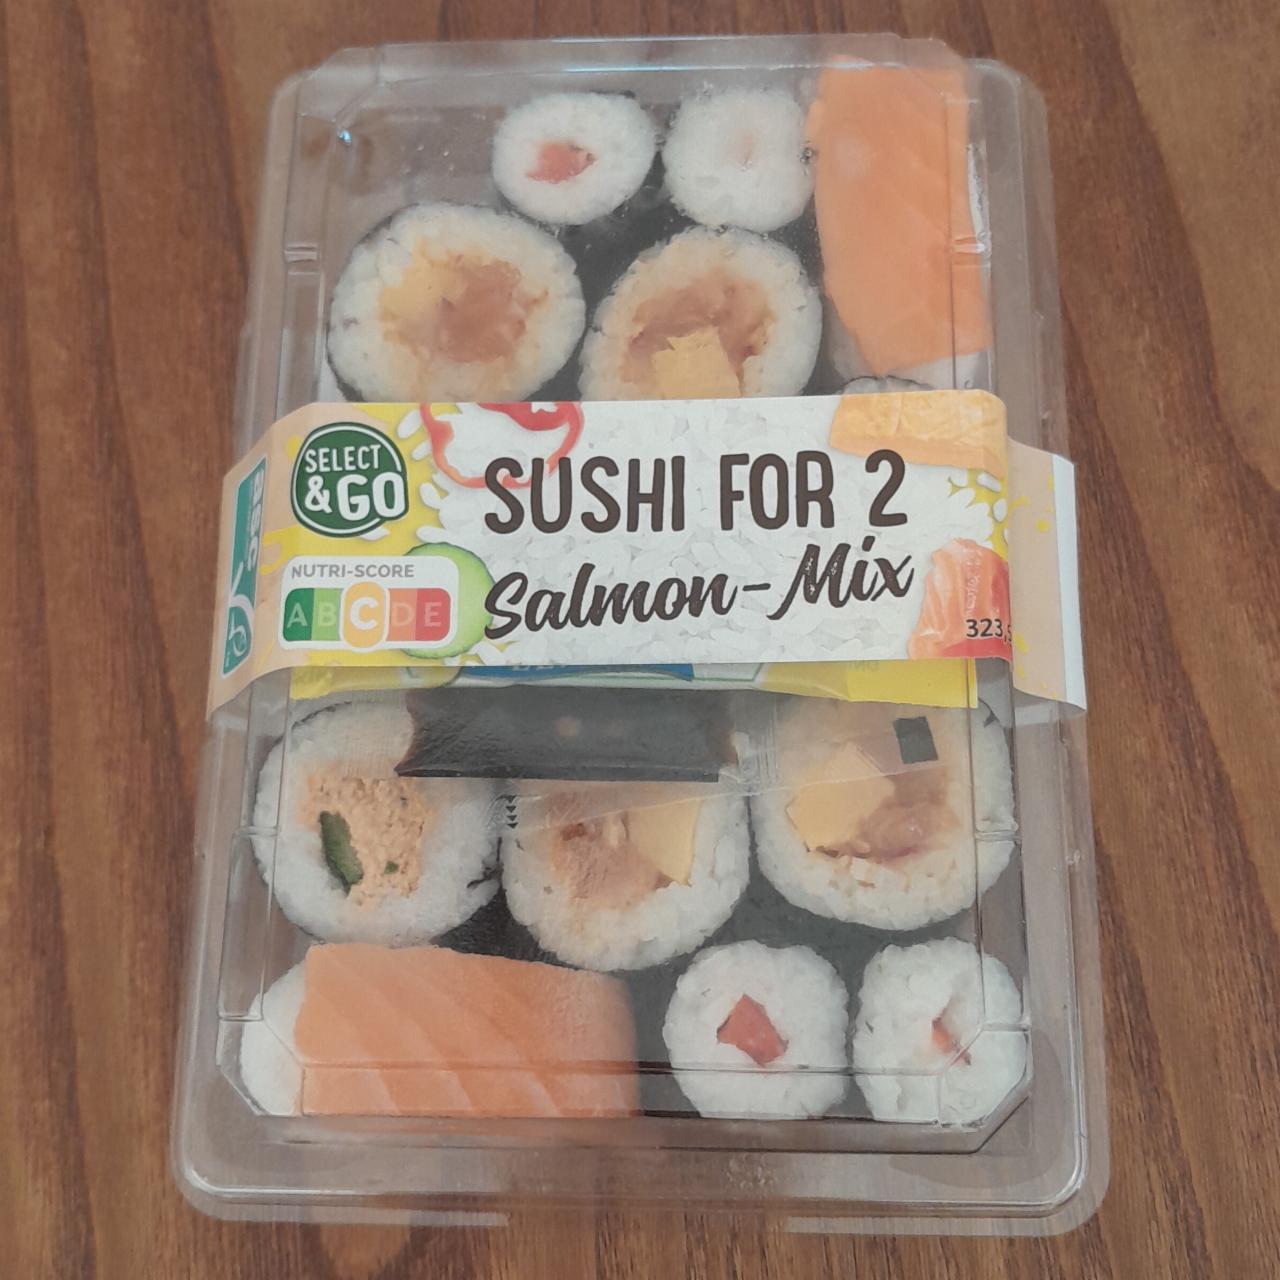 Fotografie - Sushi for 2 Salmon-Mix Select&Go